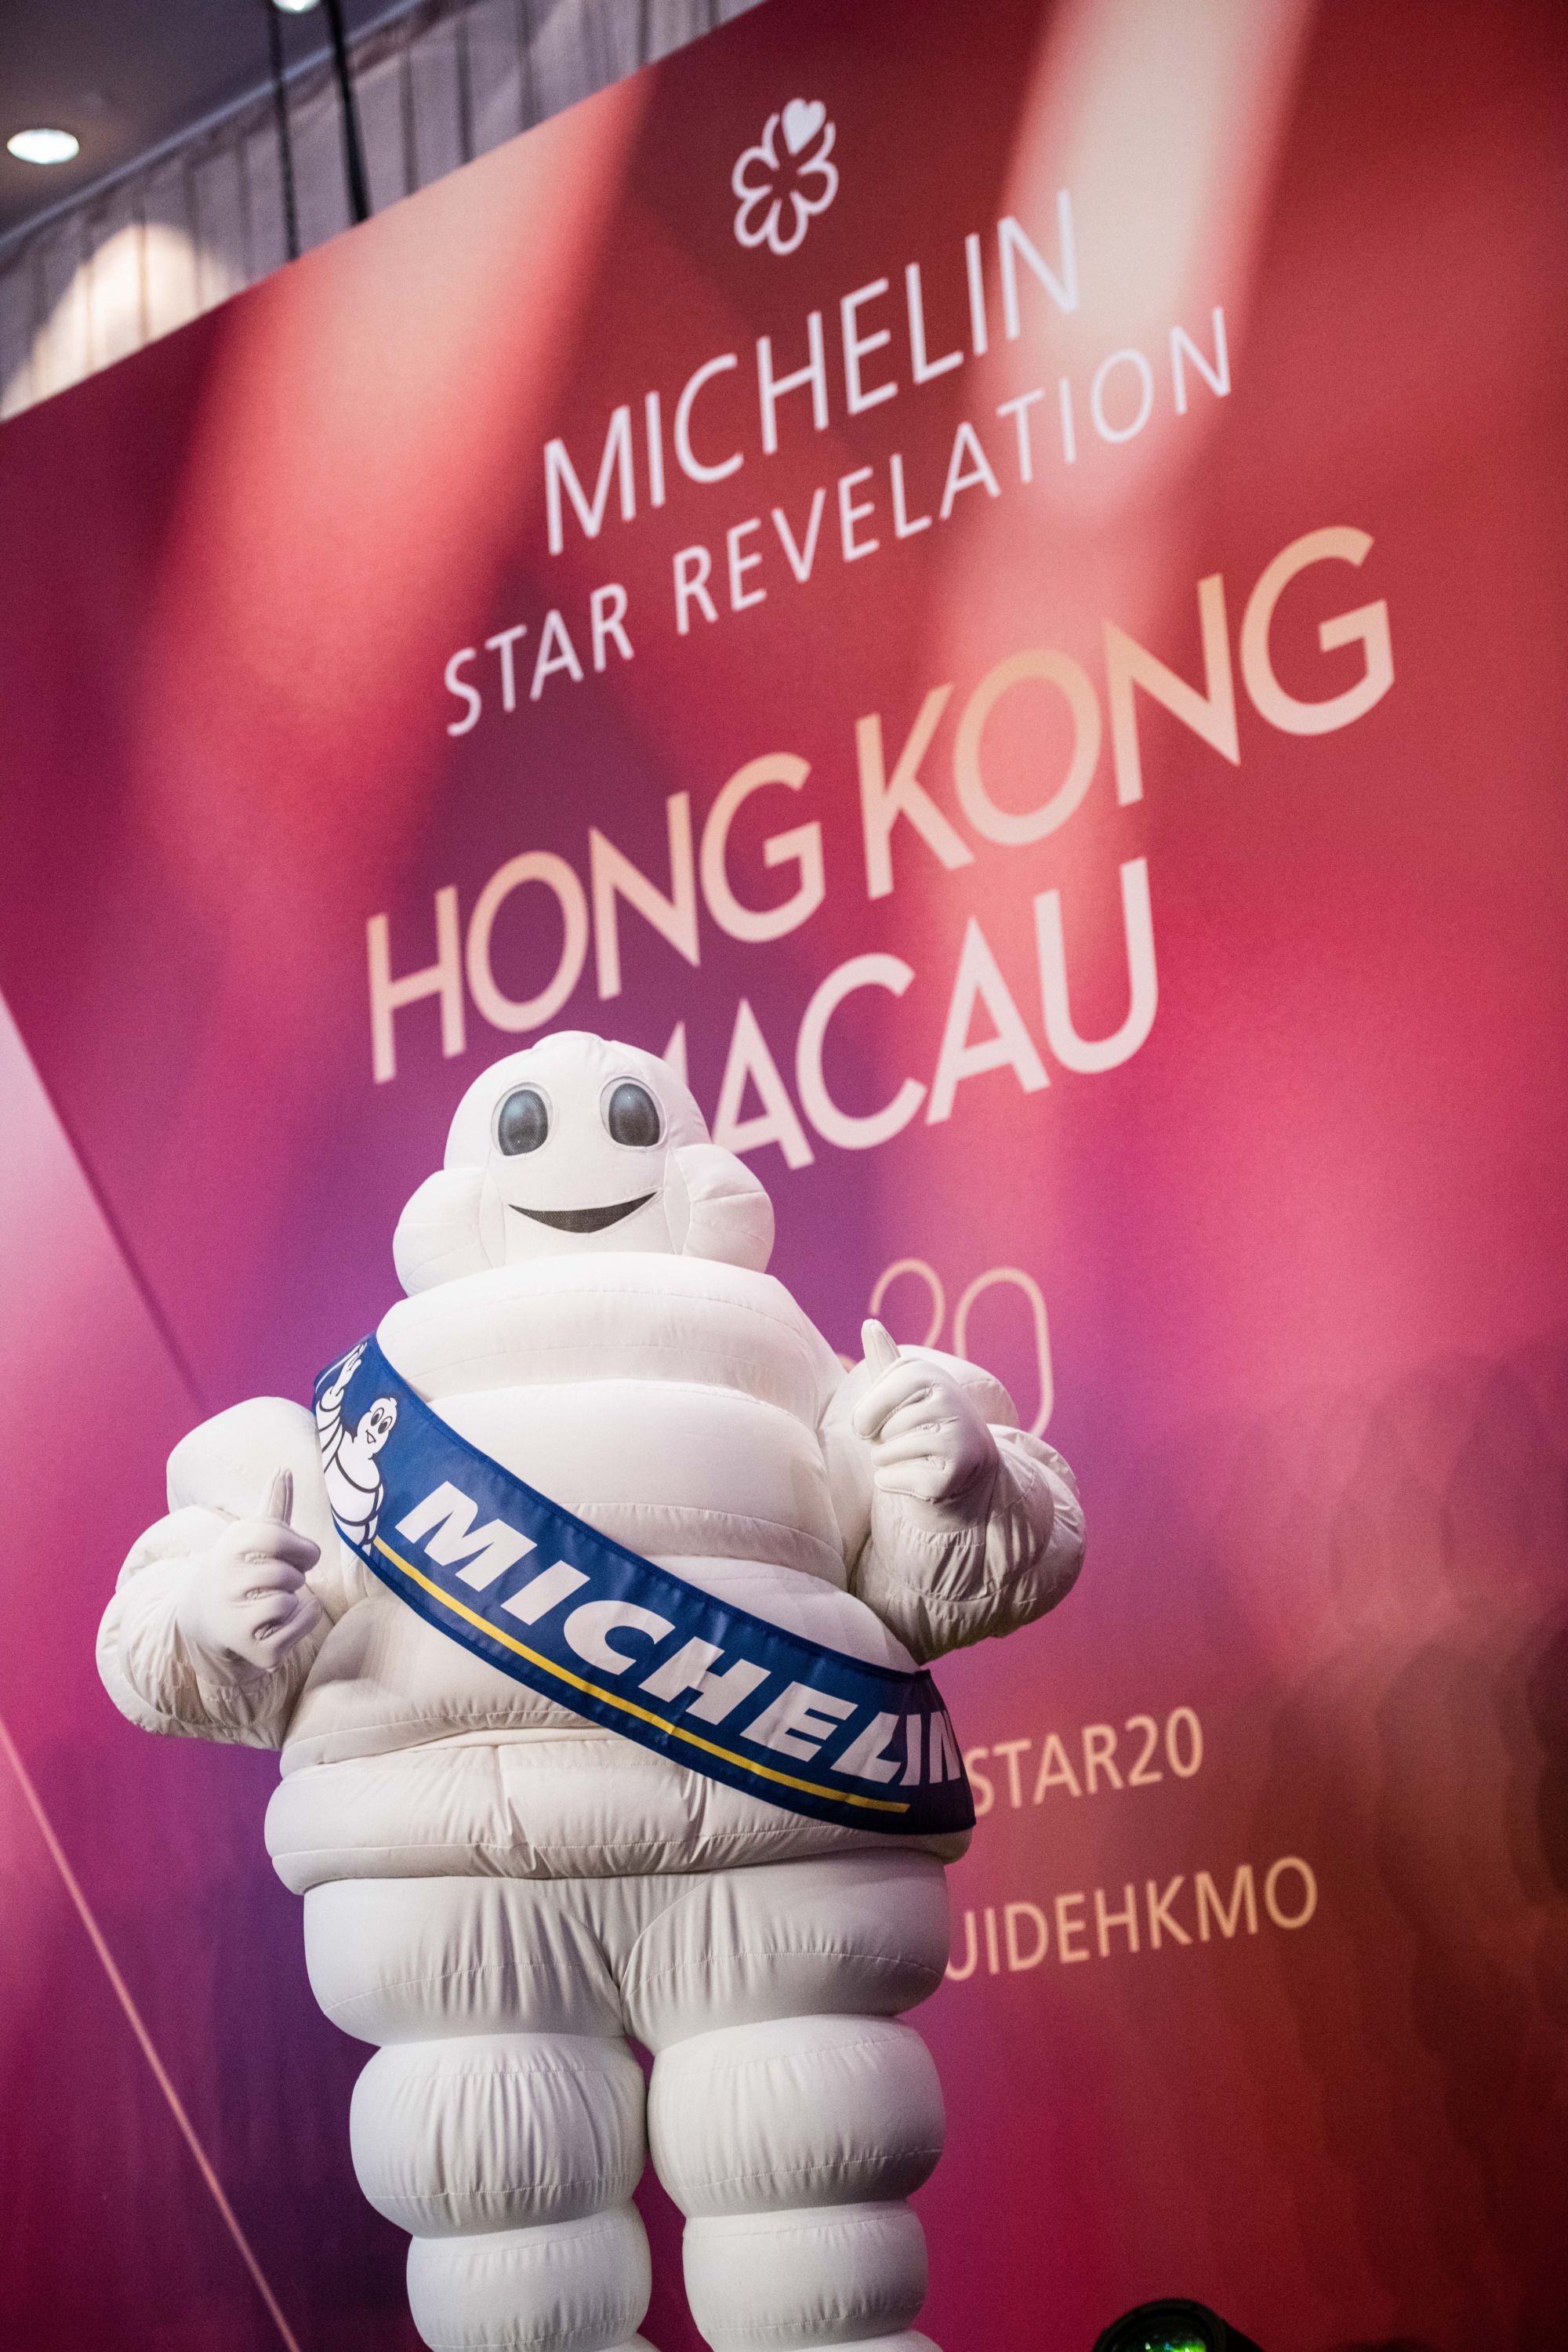 Macau Lifestyle MICHELIN Guide Hong Kong Macau 2020 Bibendum